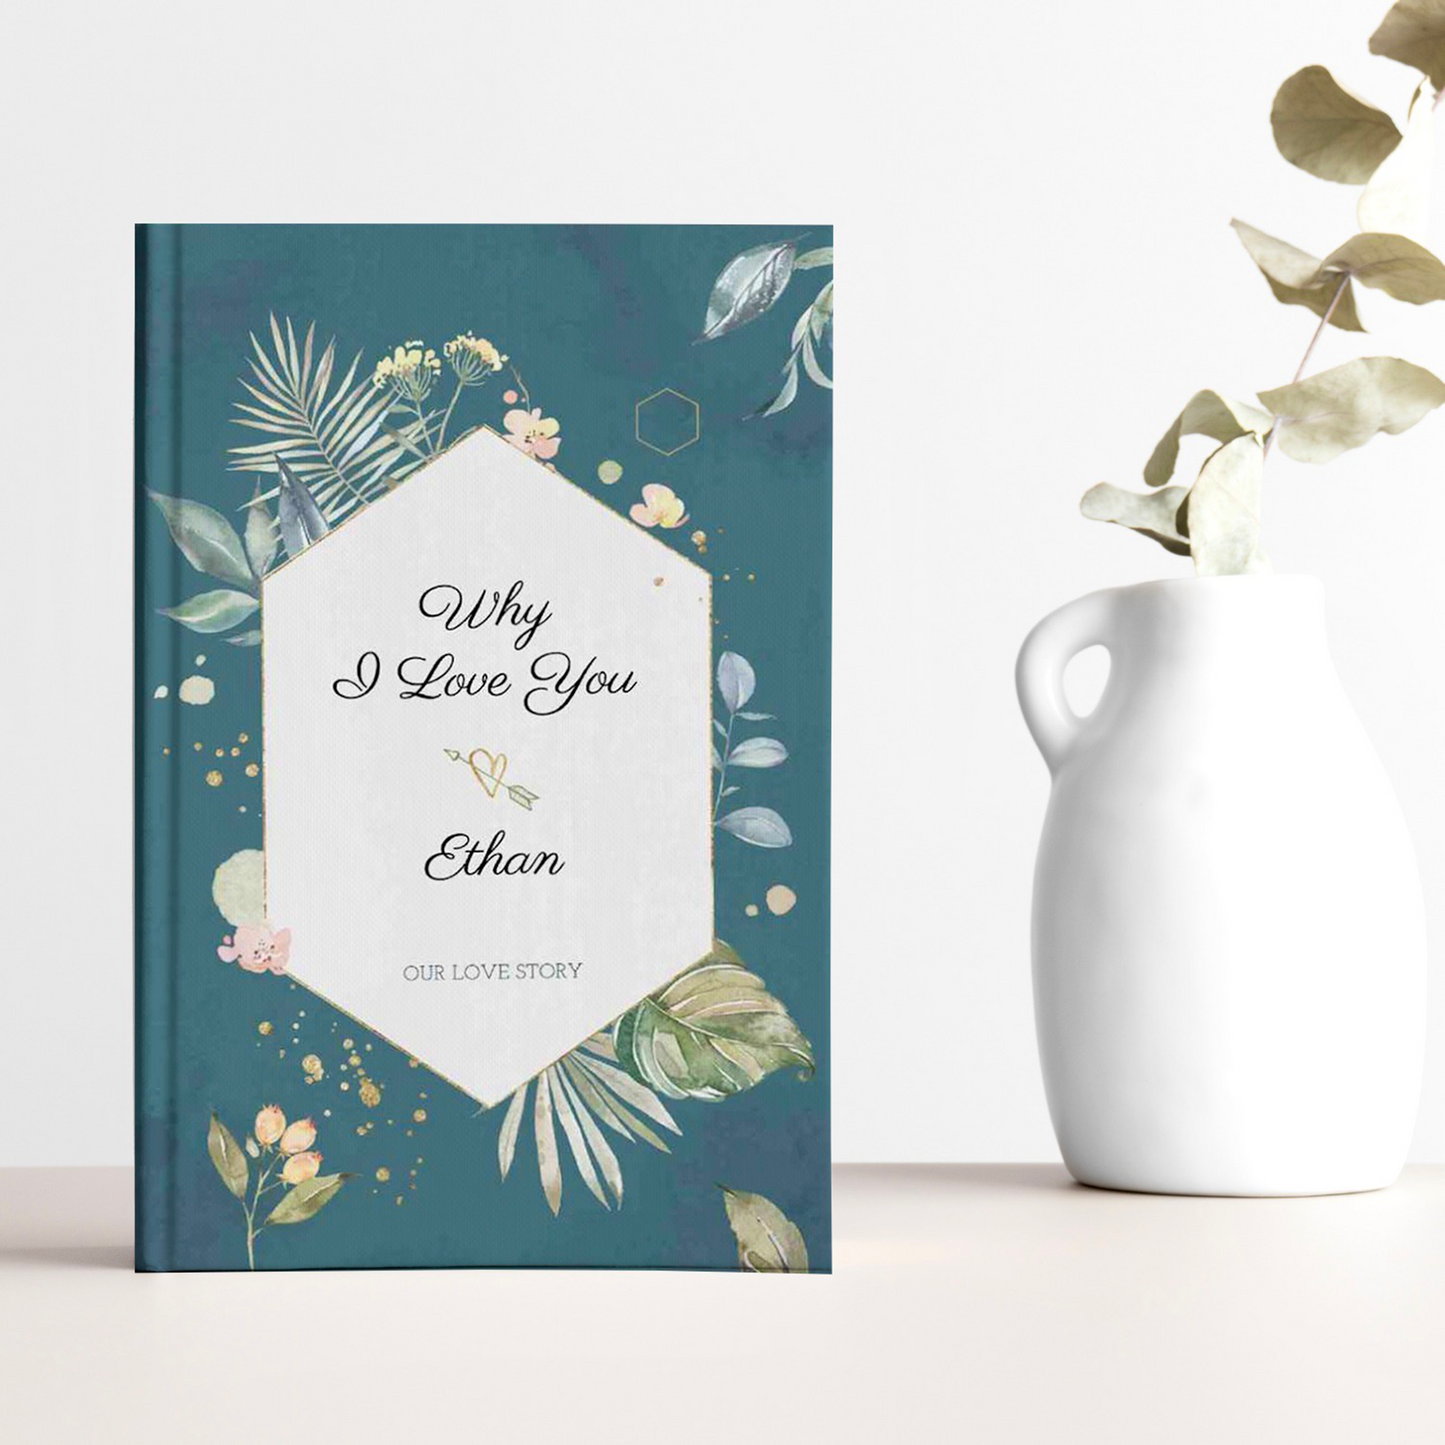 Why I love you custom book. Personalized love book. Create your own custom book.